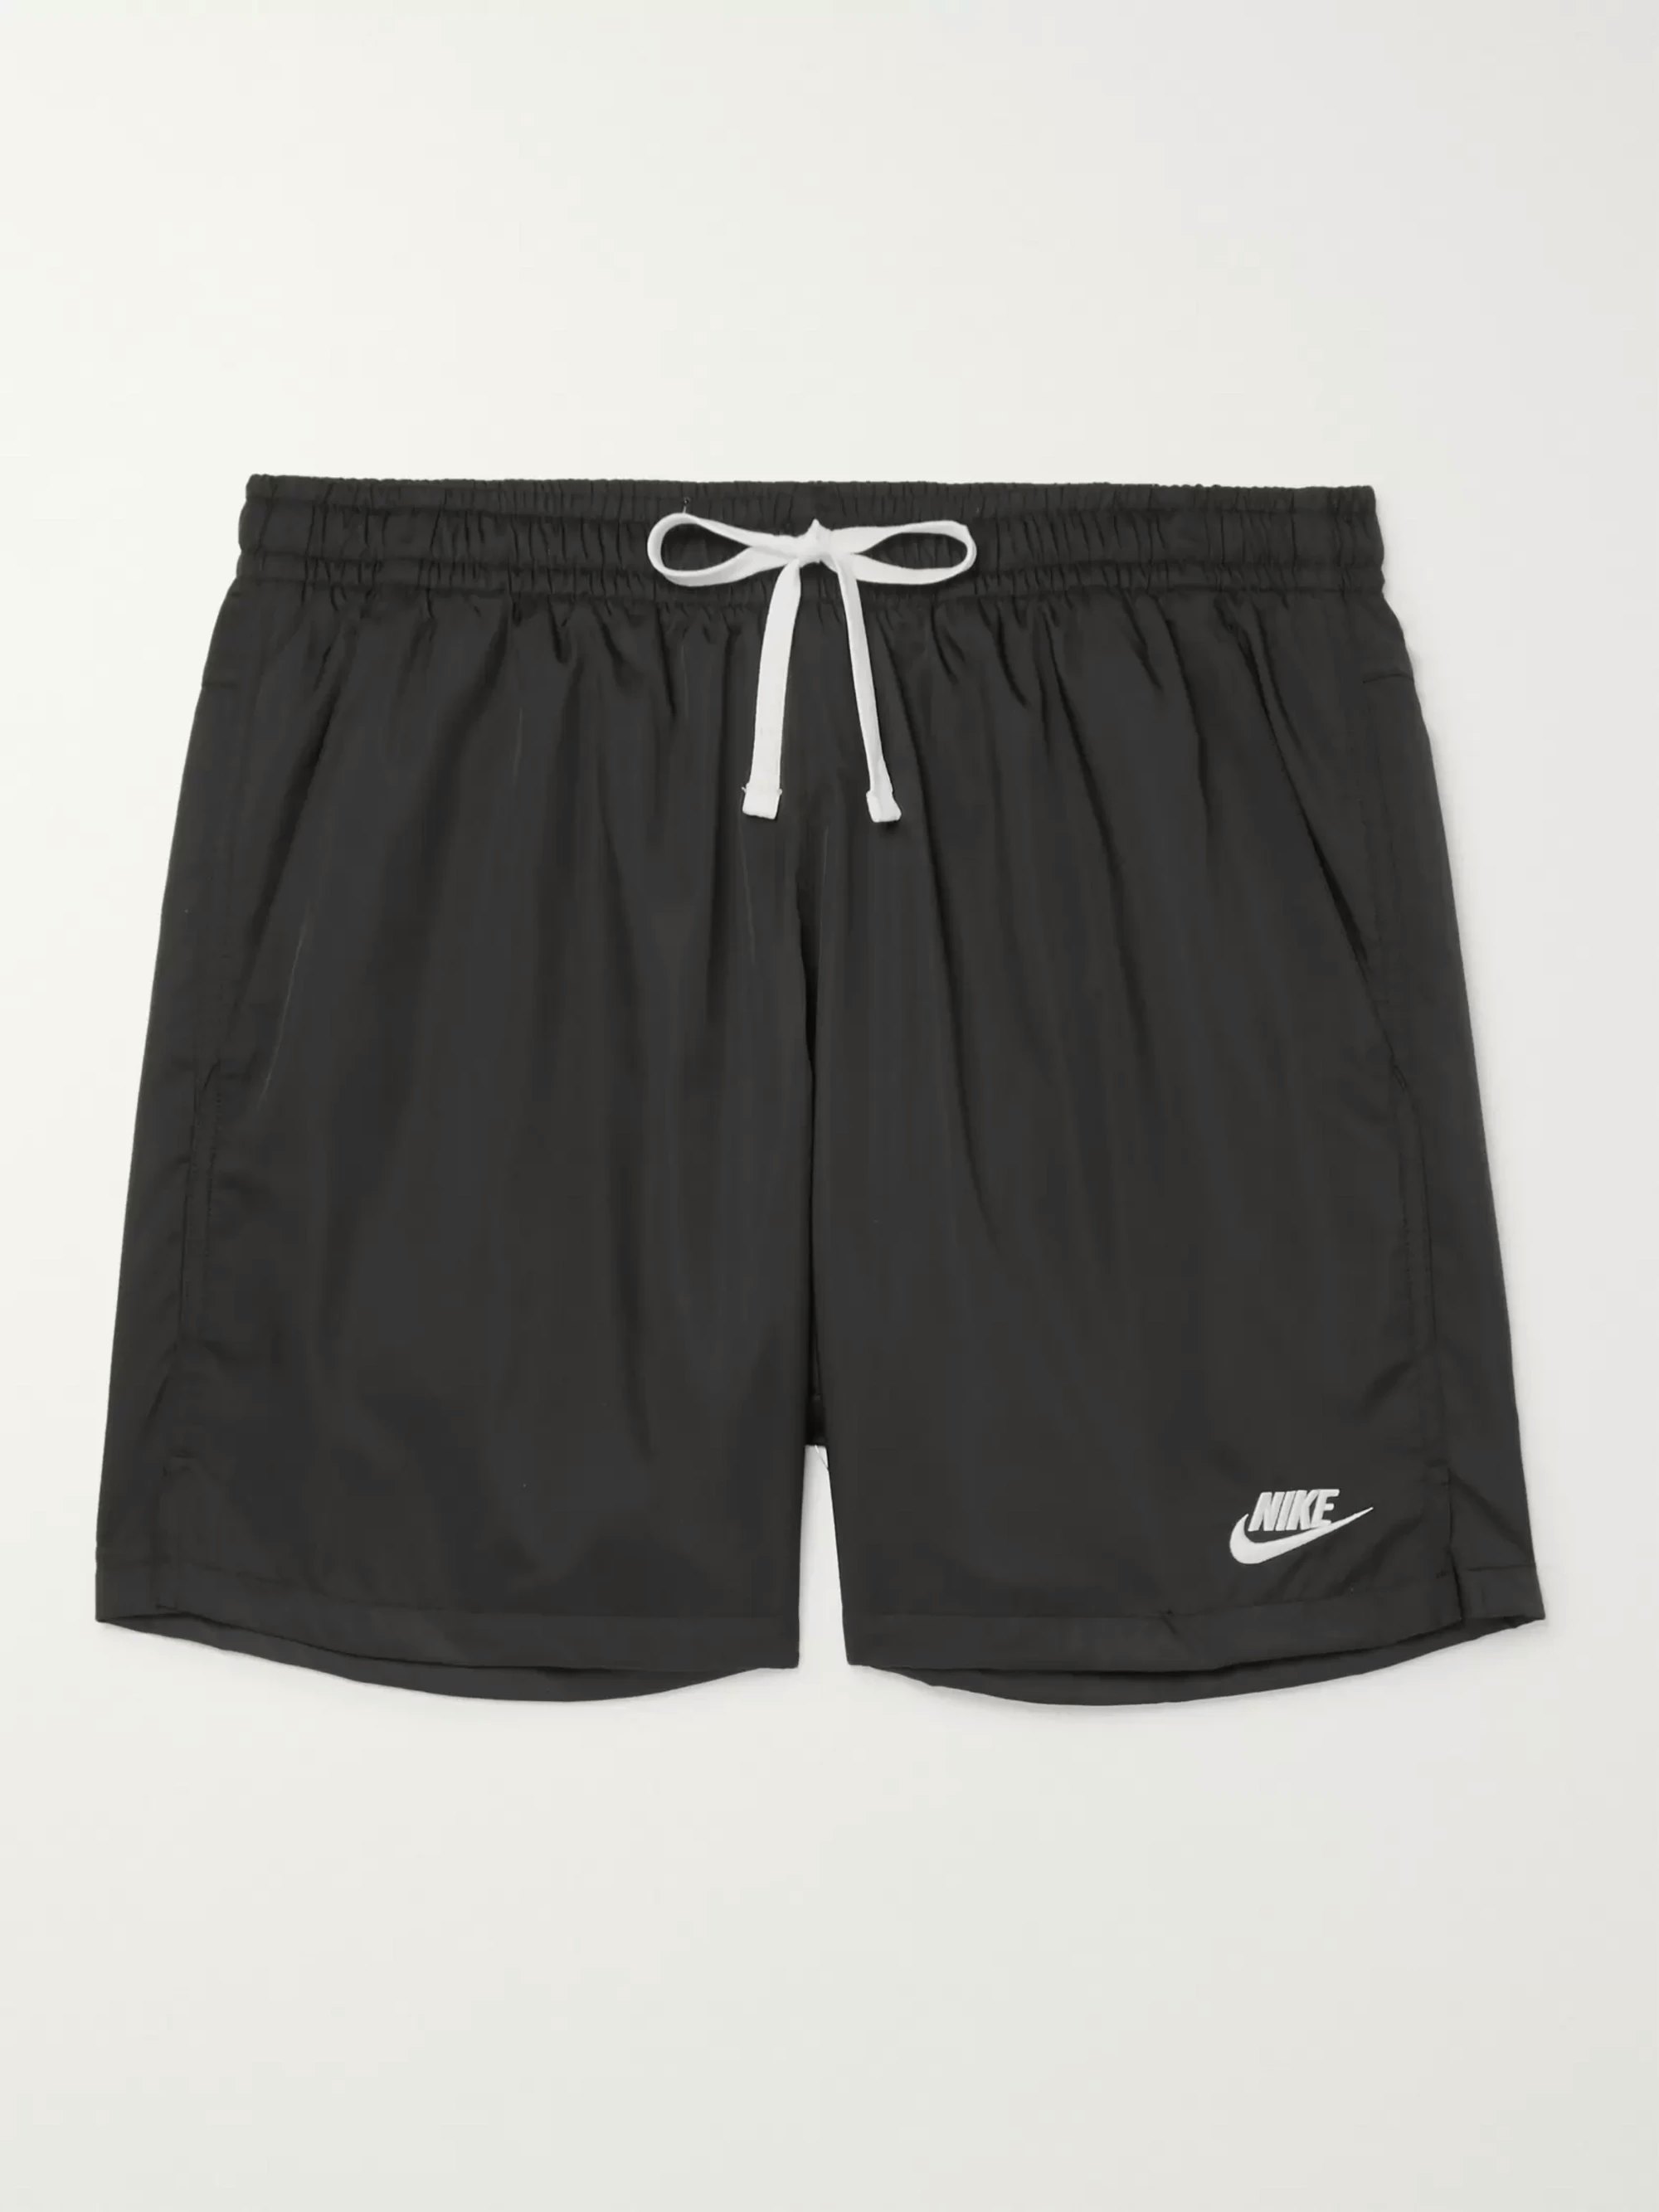 nike summer shorts